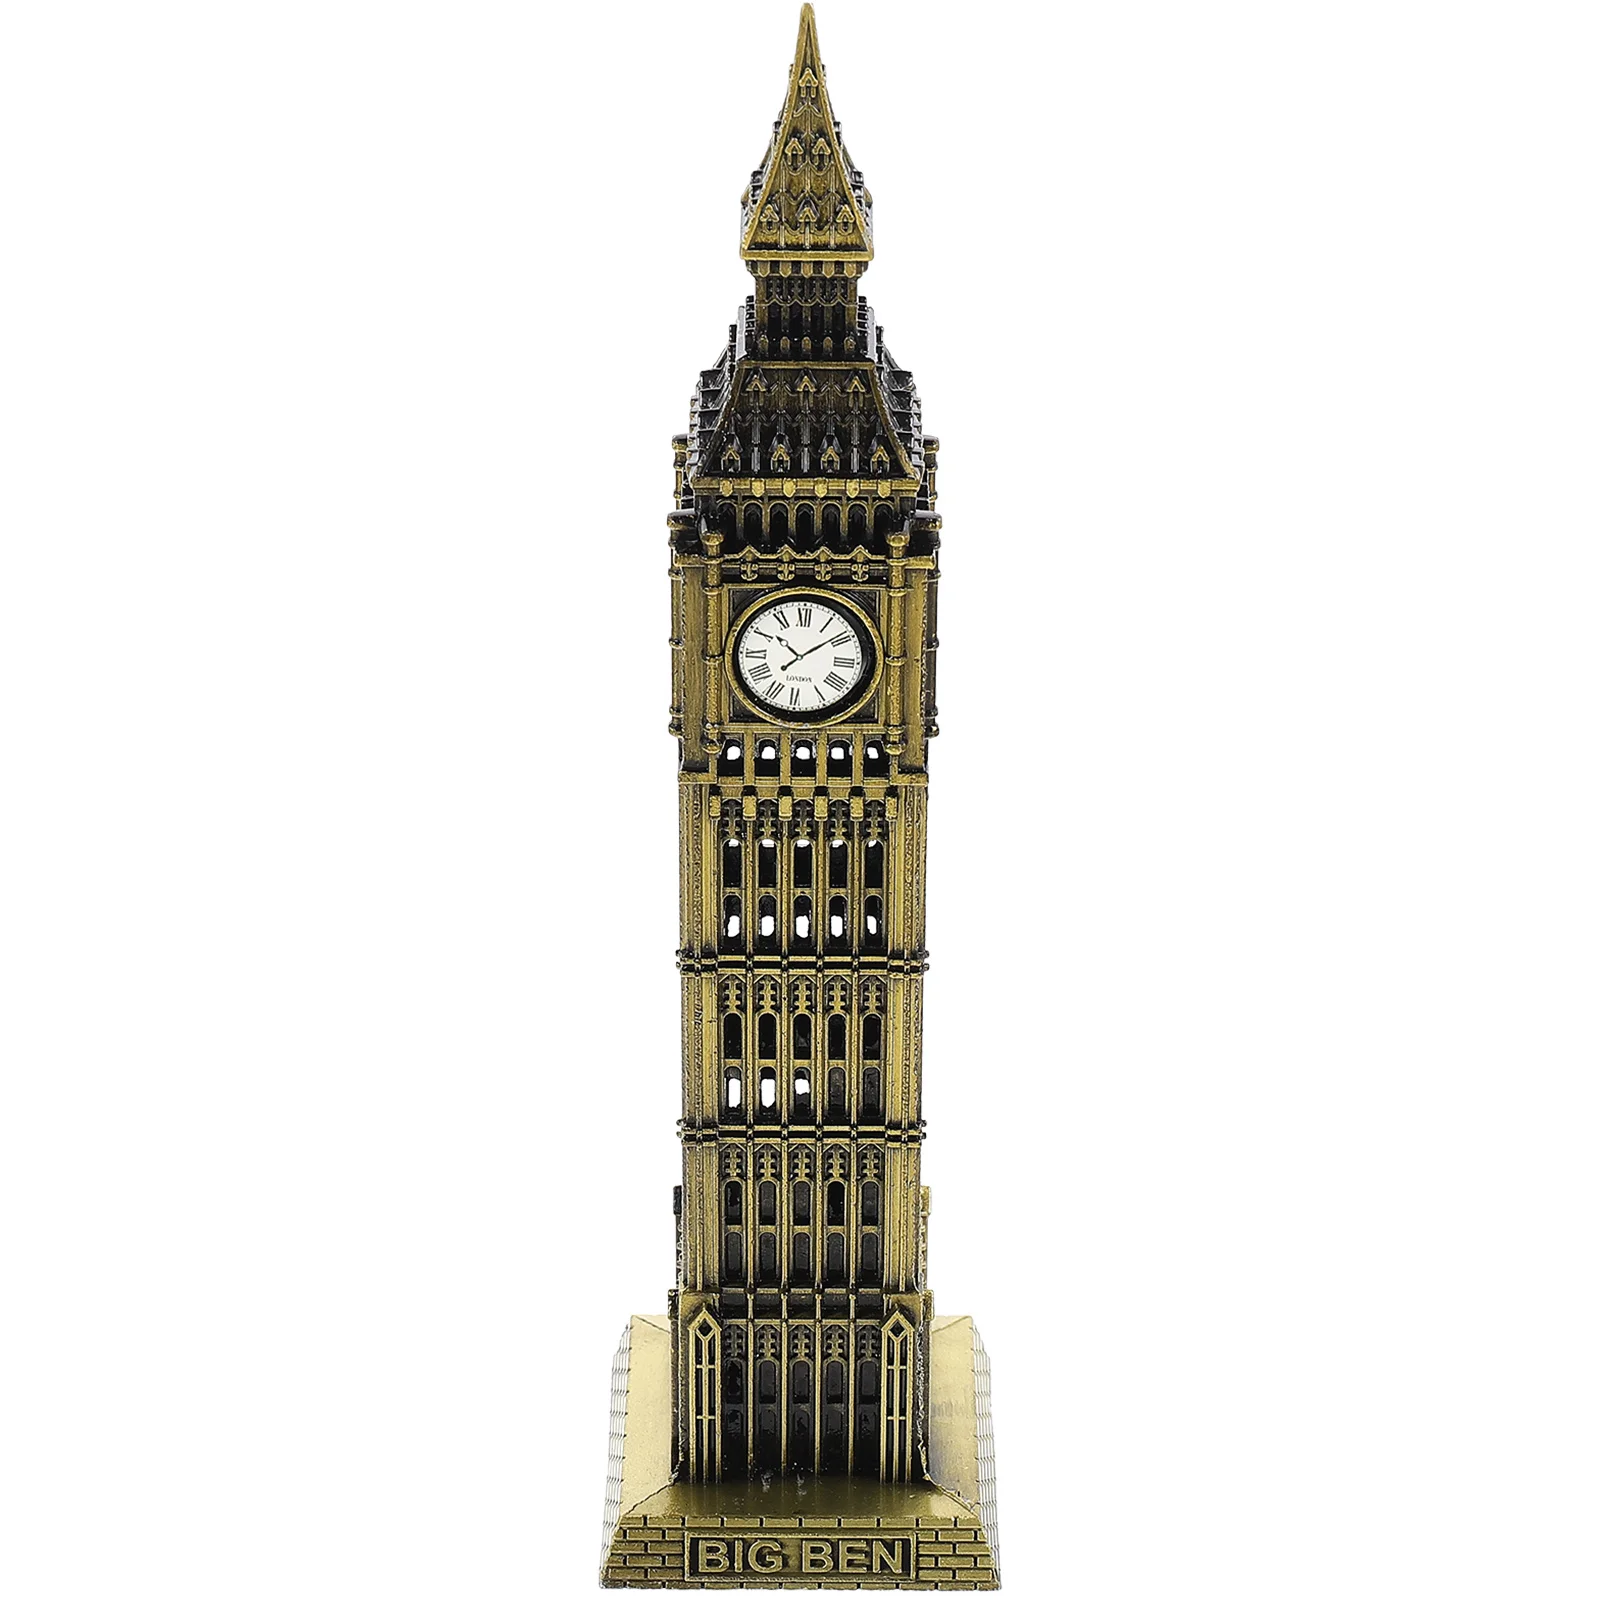 

Big Ben Building Model Architectural Statue London Metal Statues Sculptures Alloy Sculpture Bronze Clock Tower Landmarks